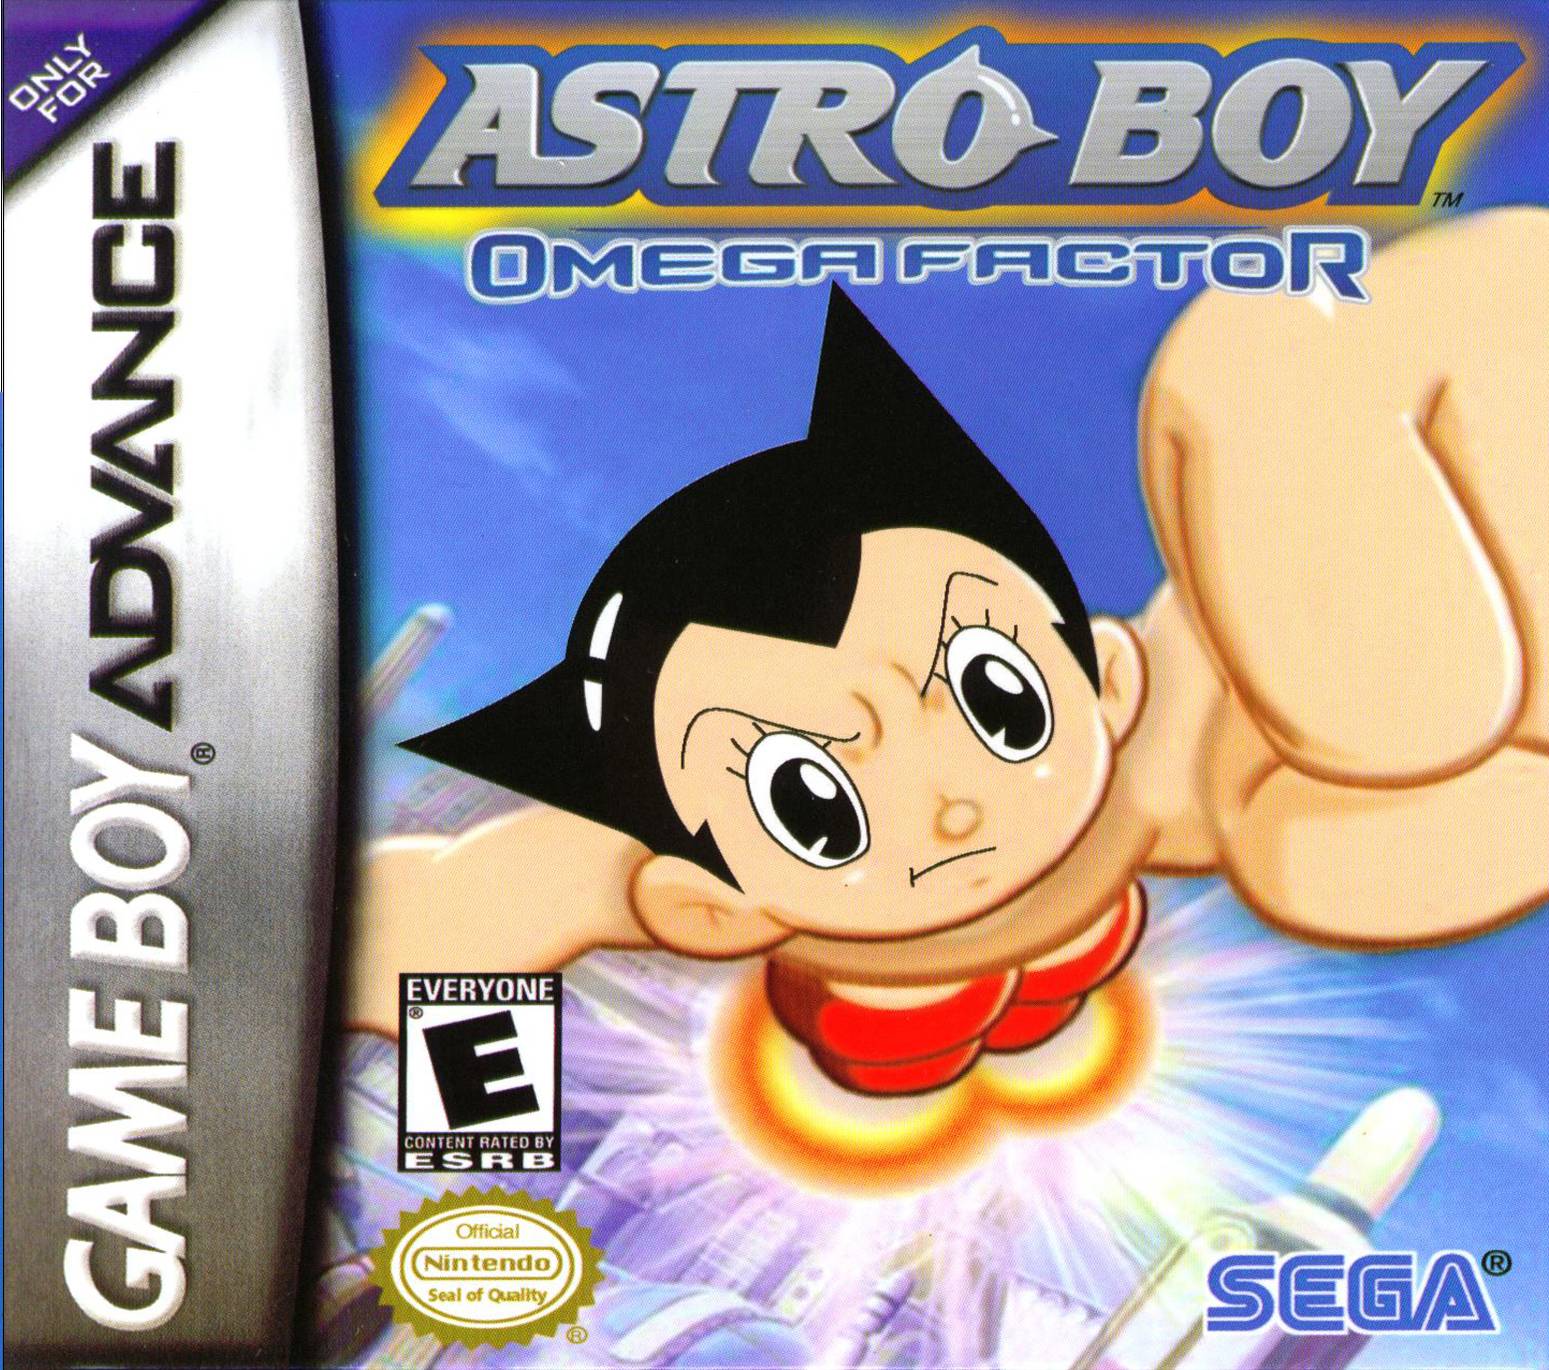 RETRO REVIEW | "Astro Boy: Omega Factor" - B3 - The Boston Bastard